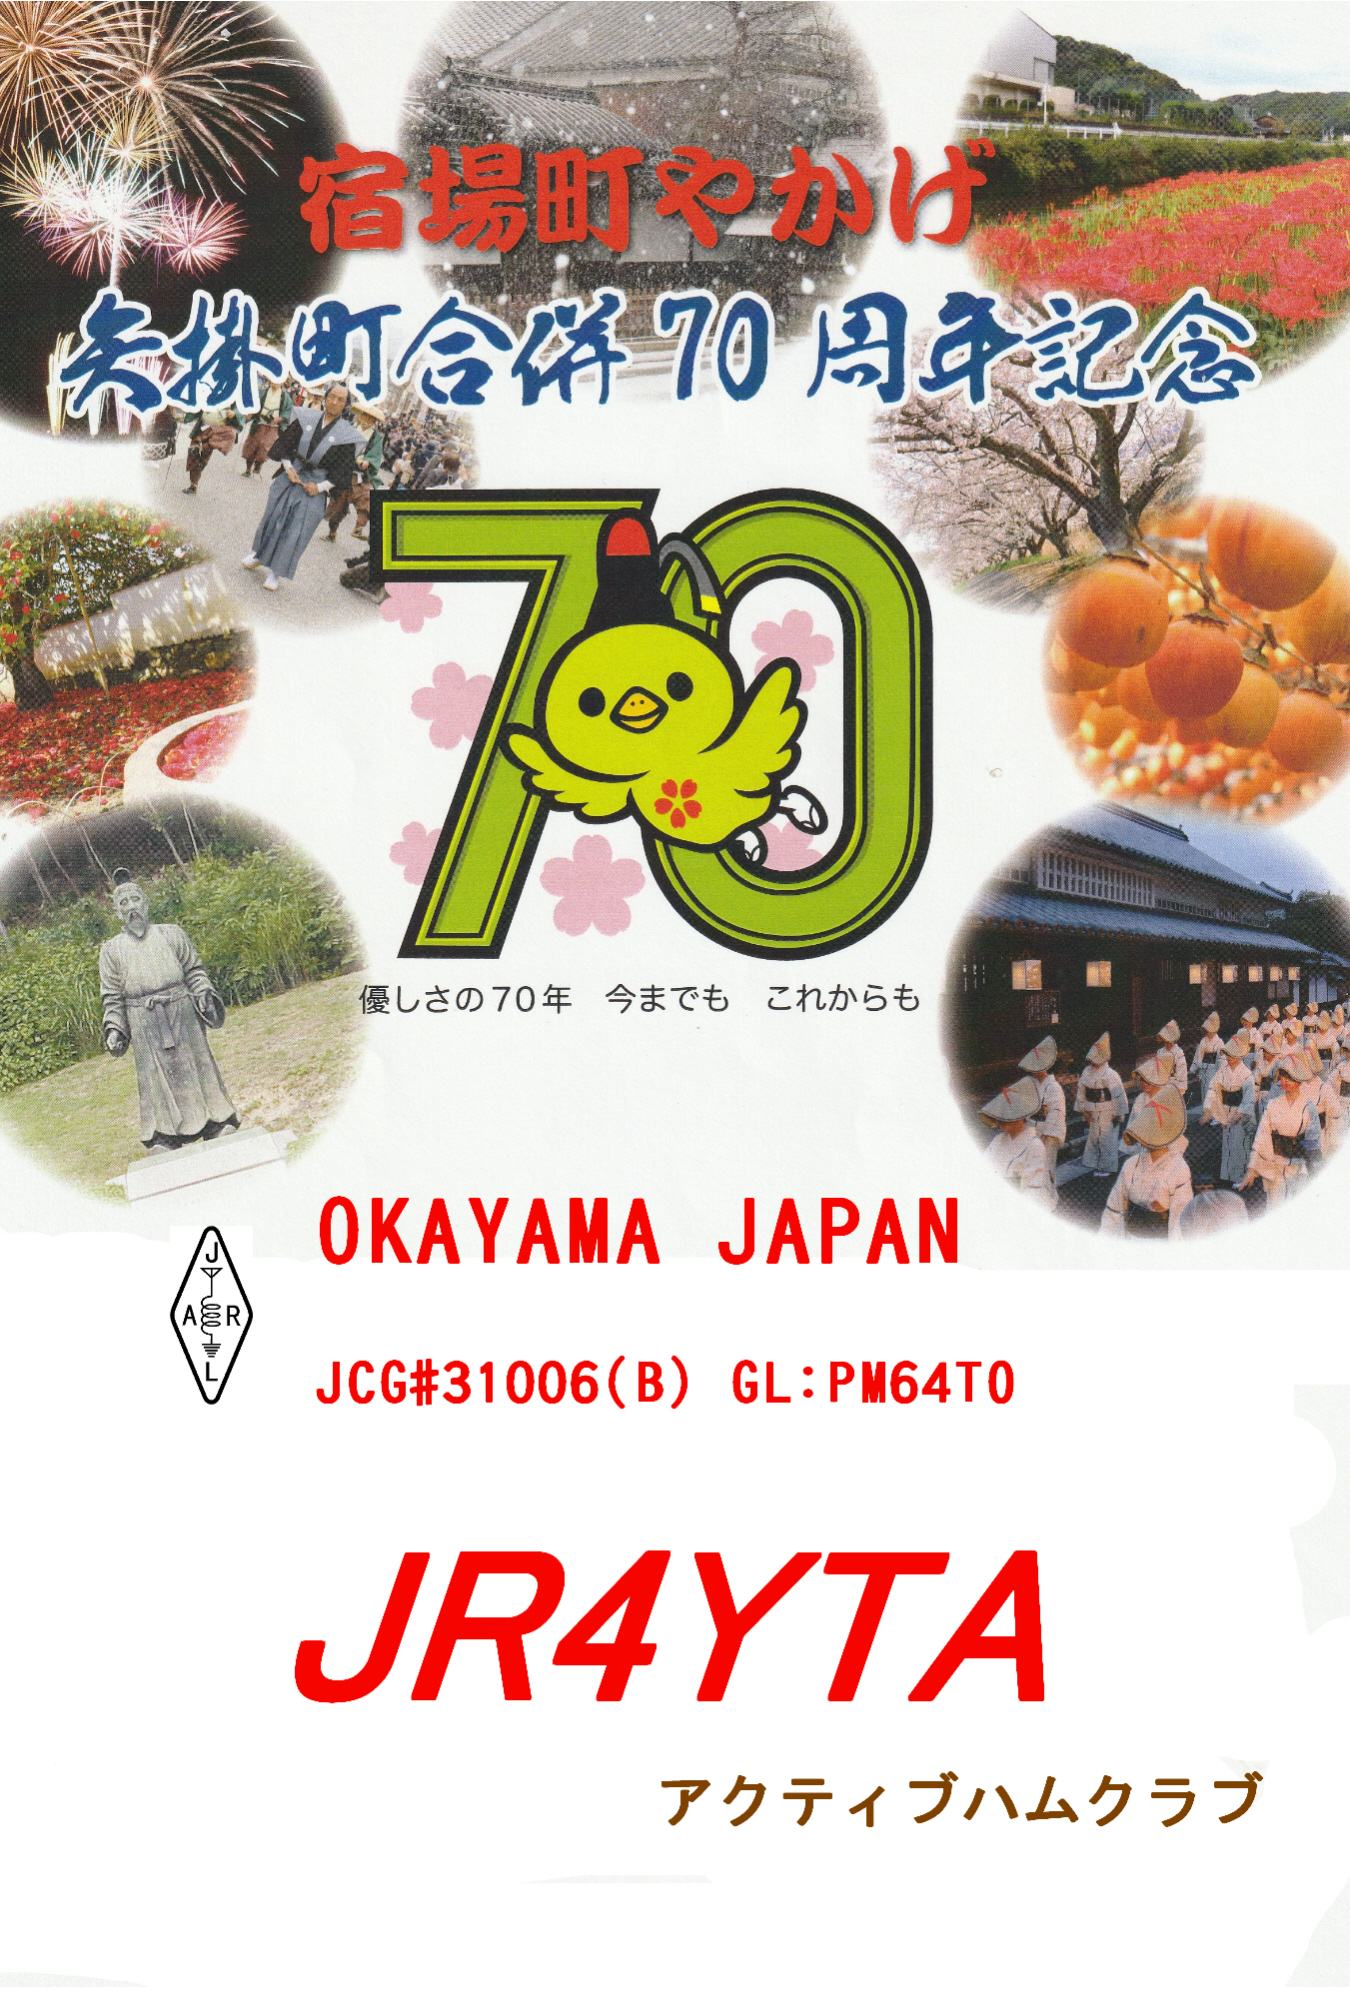 http://www.town.yakage.okayama.jp/img/QSL%E3%82%AB%E3%83%BC%E3%83%89%EF%BC%91.jpg